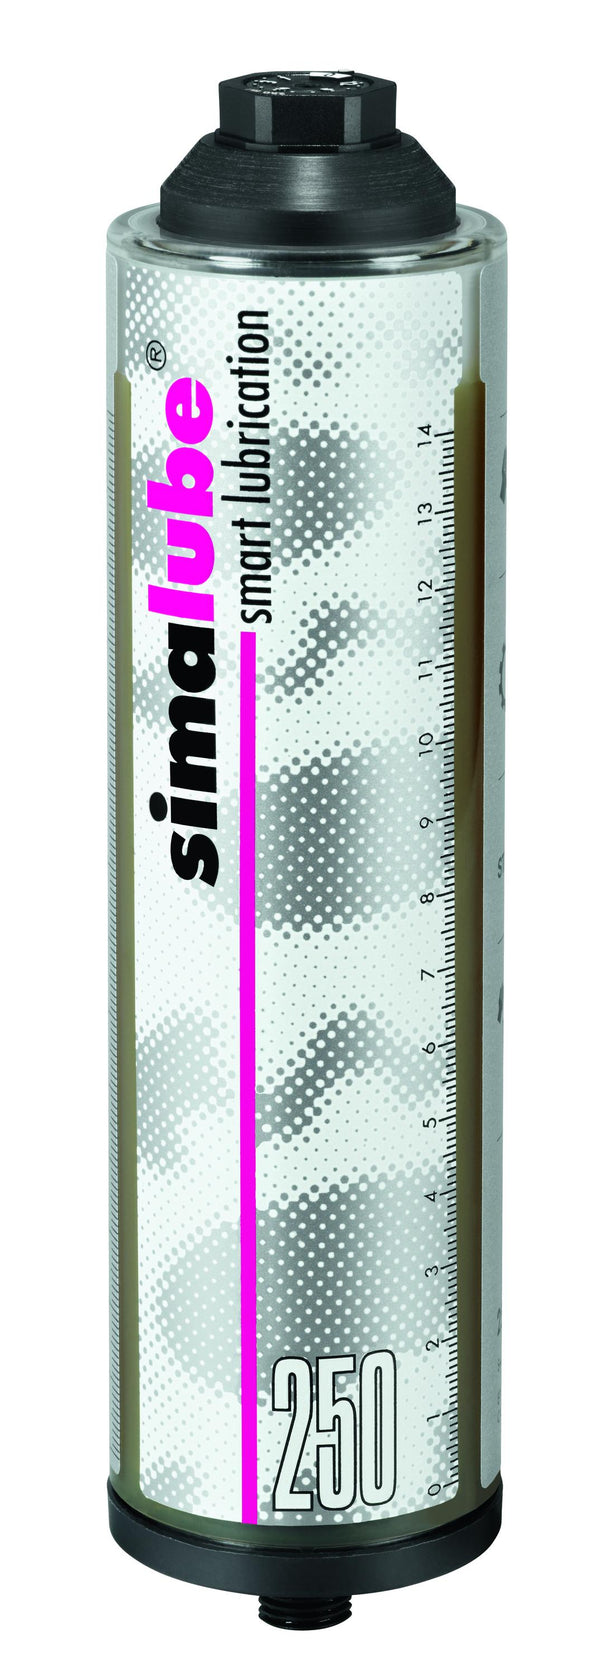 Simalube lubrication cartridge filled with organic grease 250ml